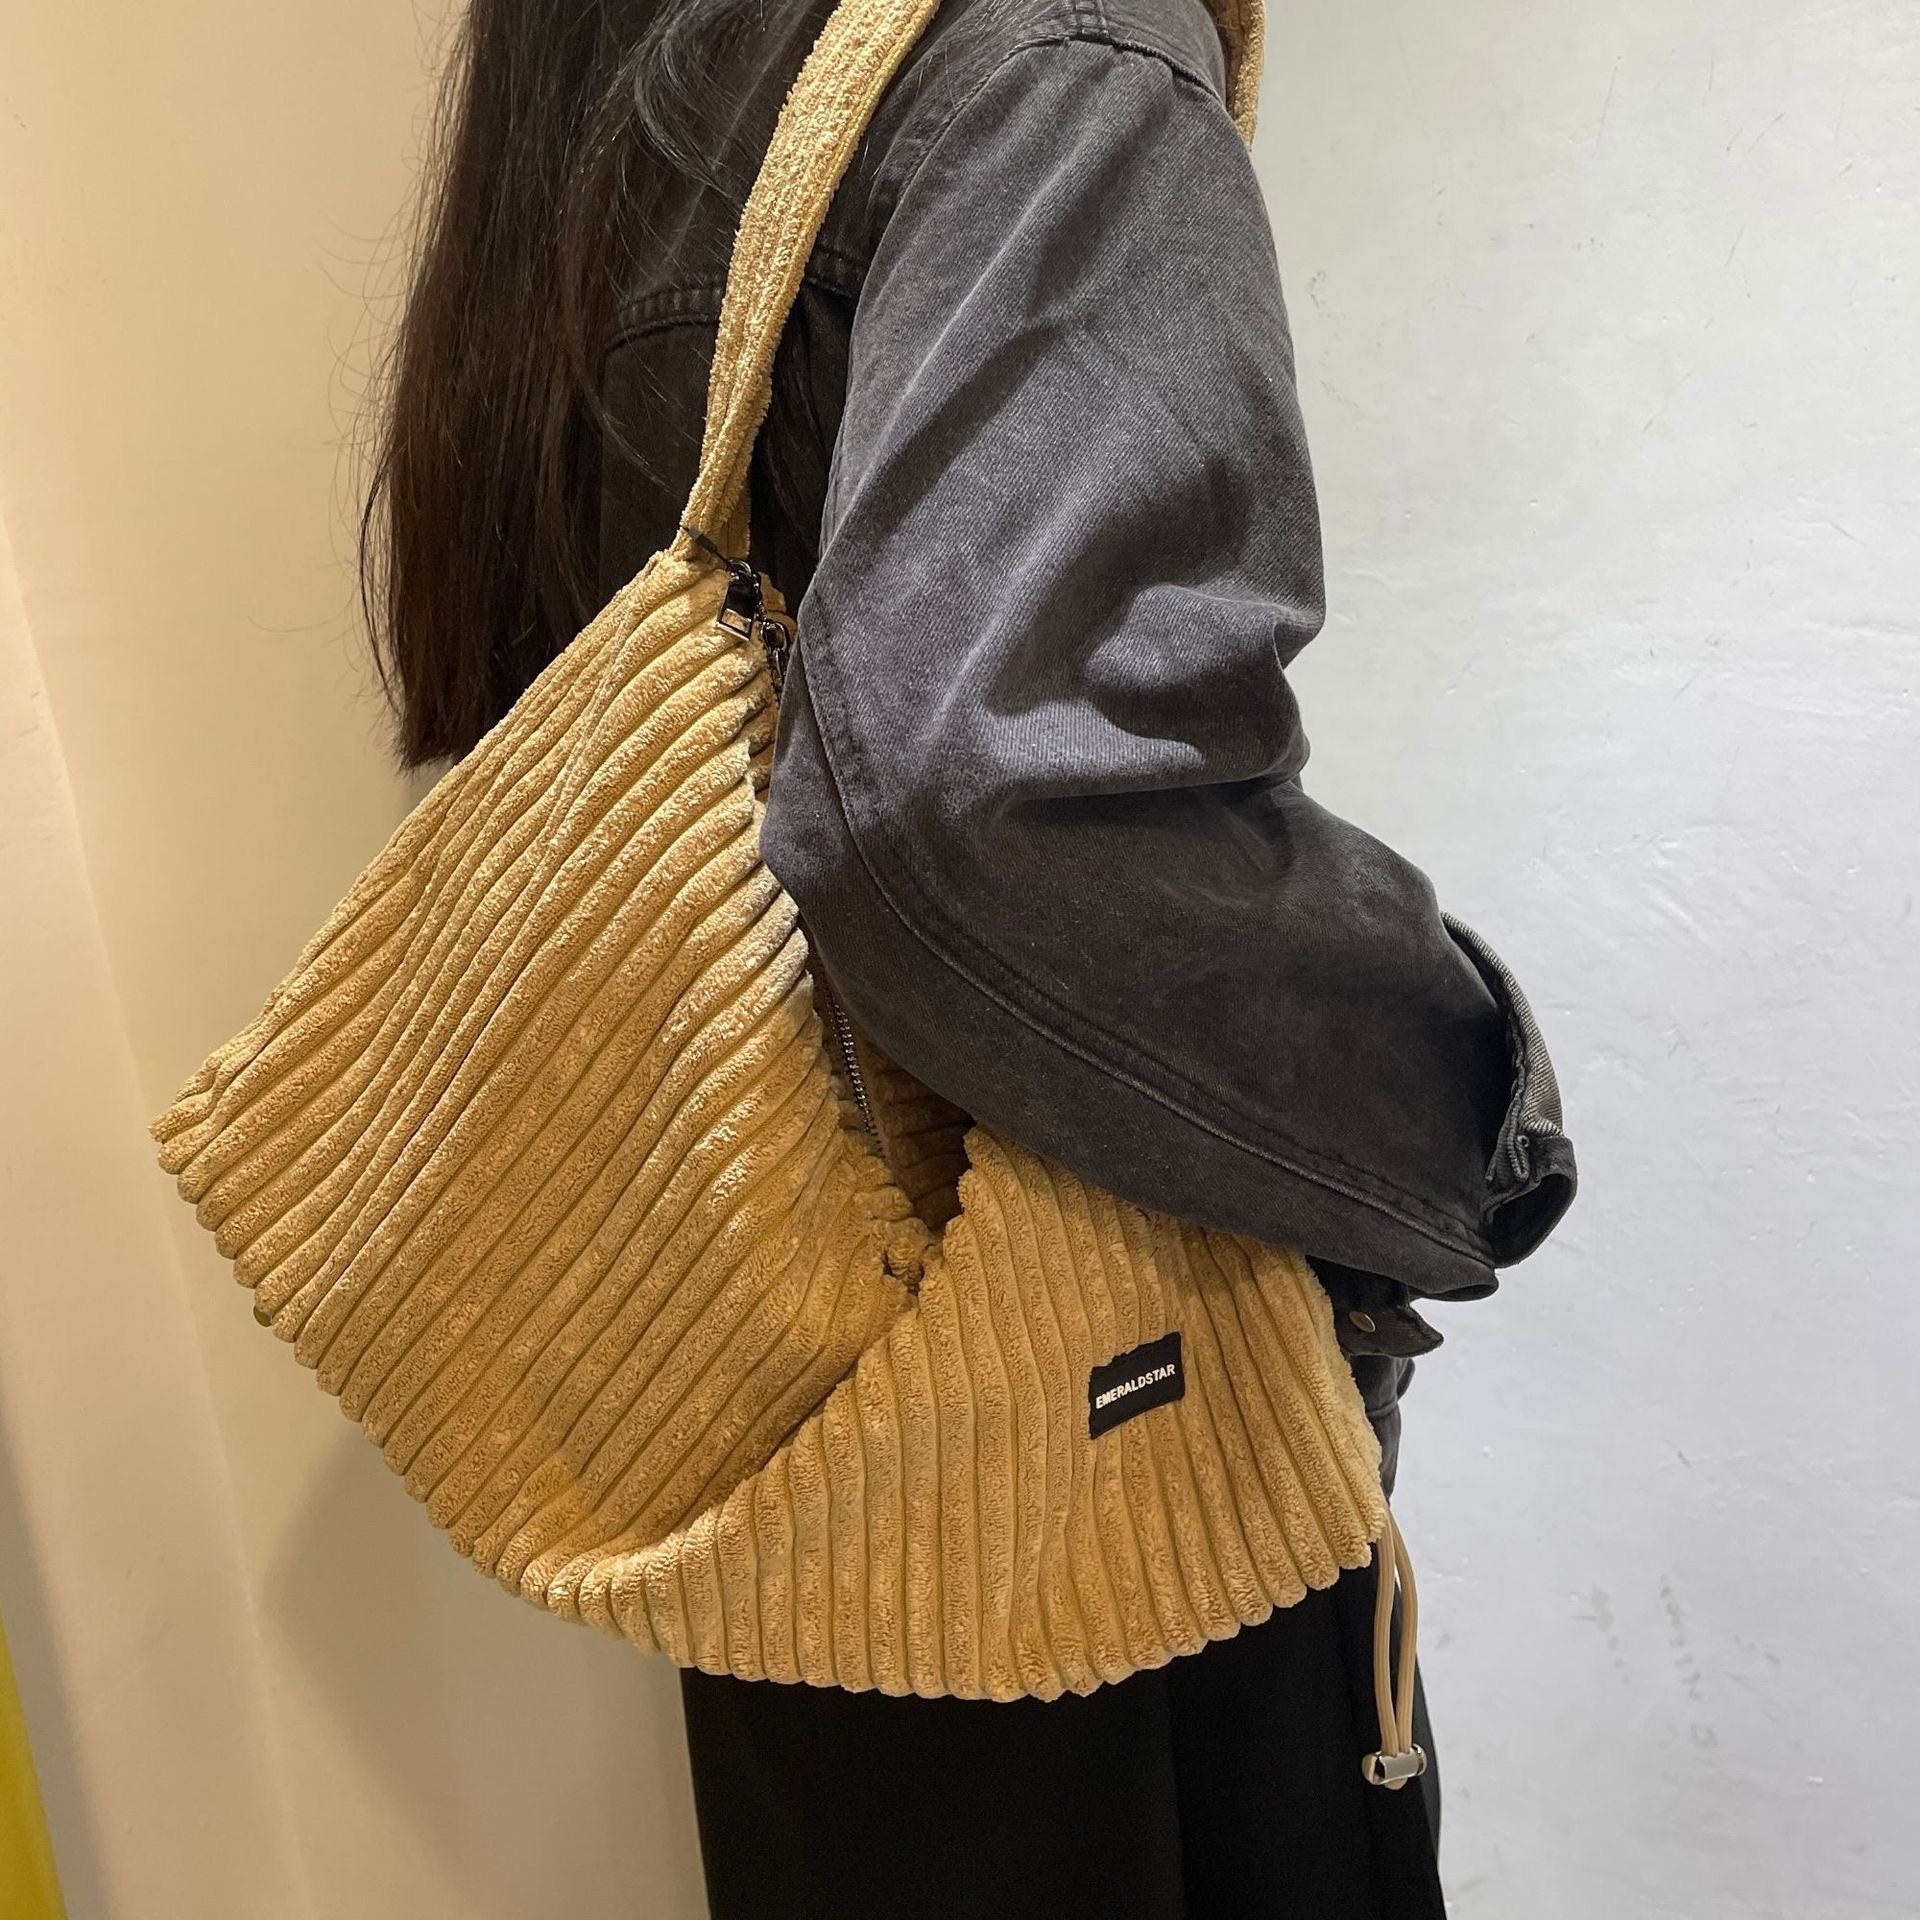 Huffmanx Corduroy Tote Bag Corduroy Shoulder Bag Corduroy Purse Women Vintage Bags Canvas Shoulder Bag Canvas Tote Best Gift For Her